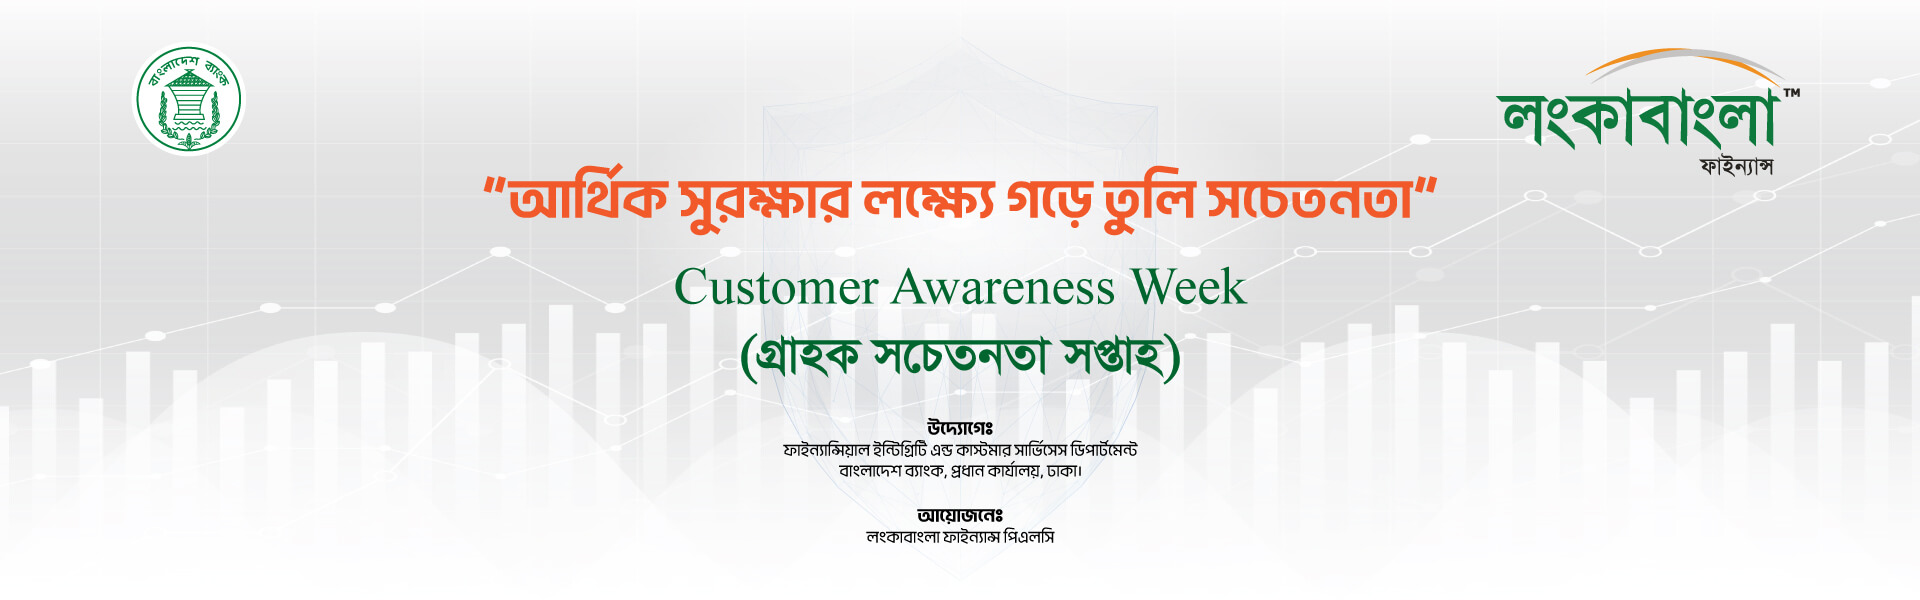 Customer Awareness Week Banner